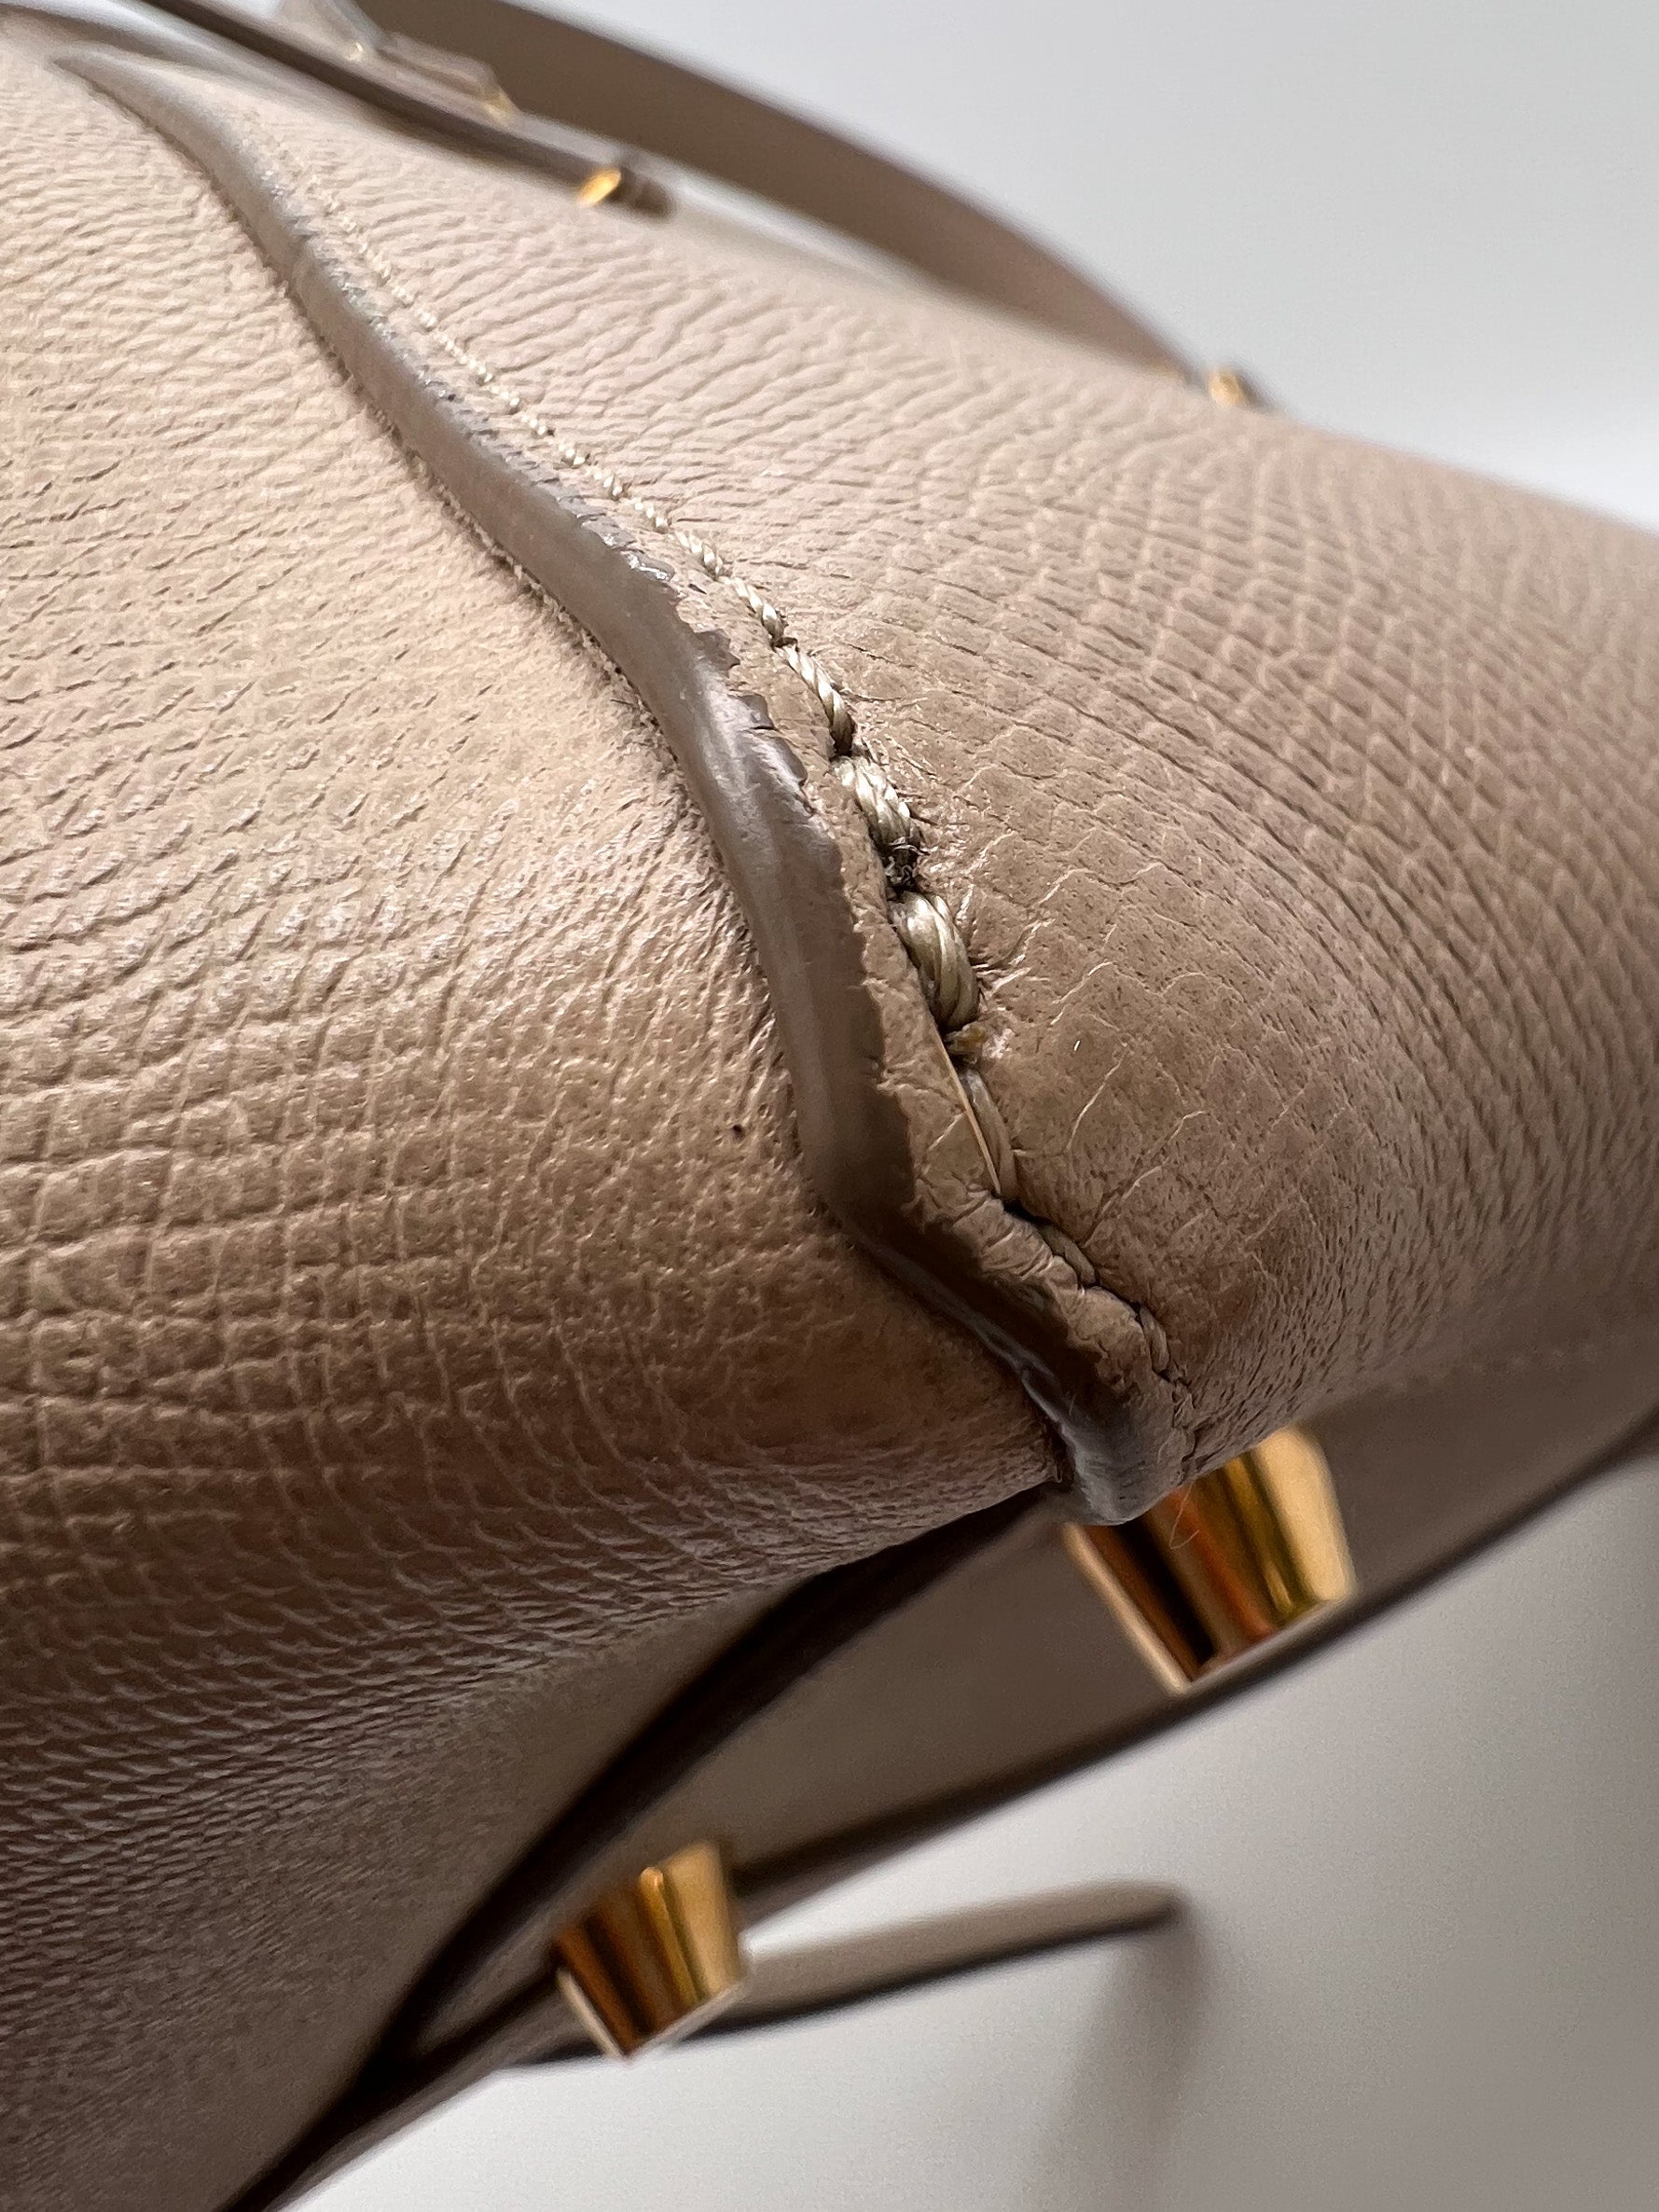 Get the Look for Less - Celine Mini Belt Bag — Baus Ladies